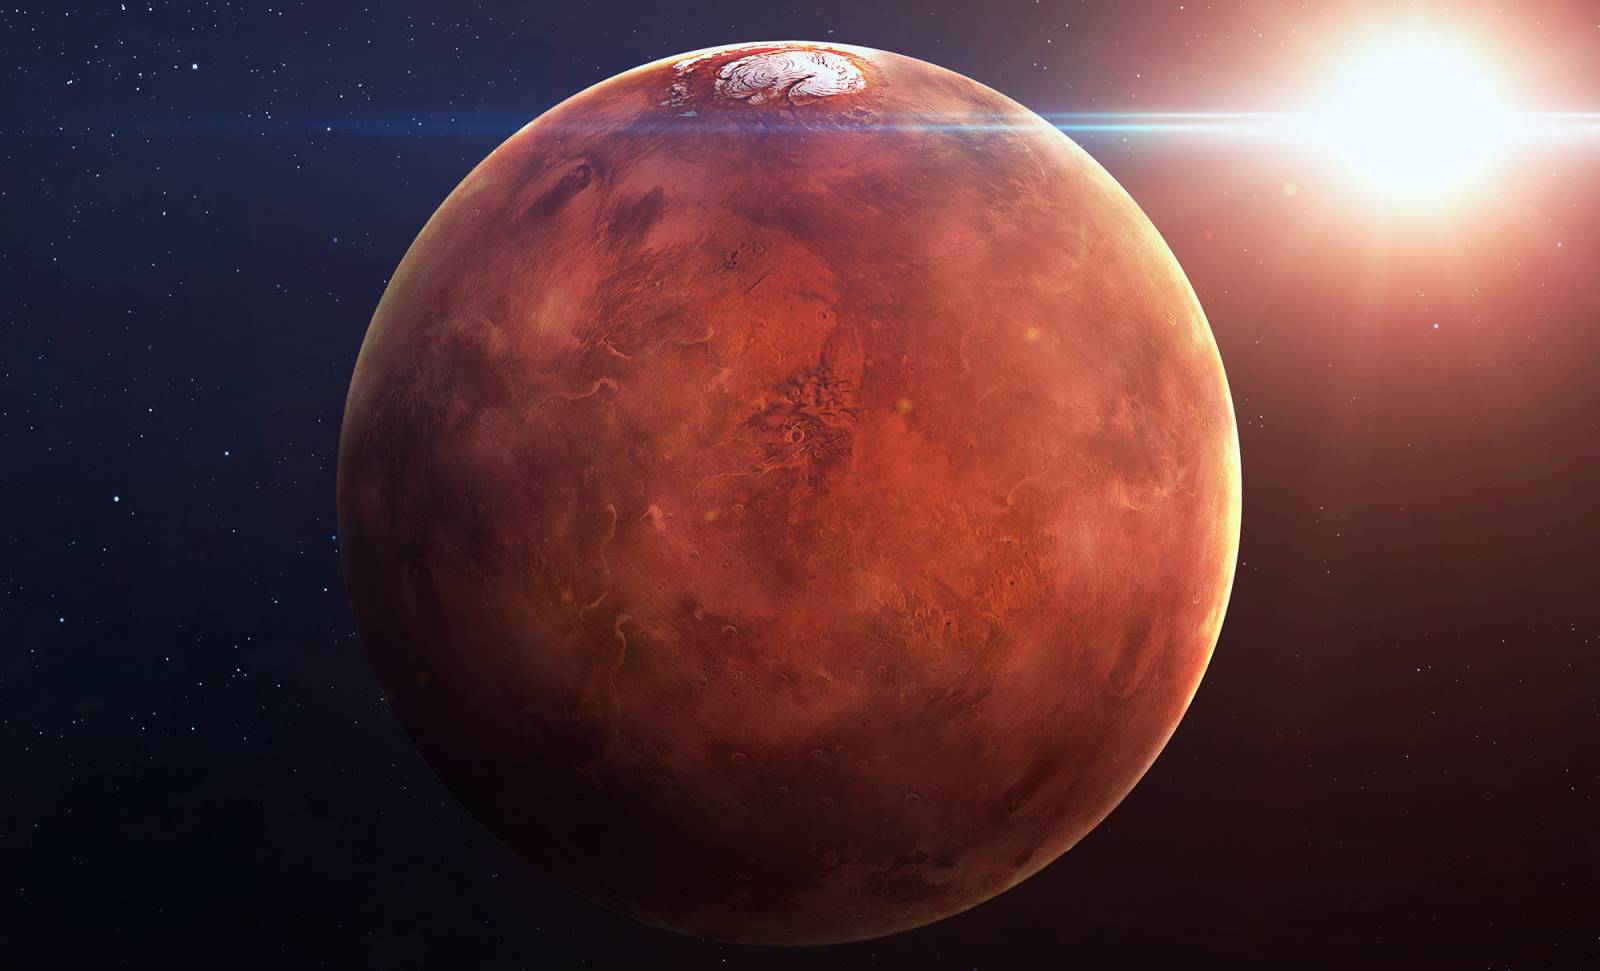 Planeta Marte anunt nasa viitor omenire